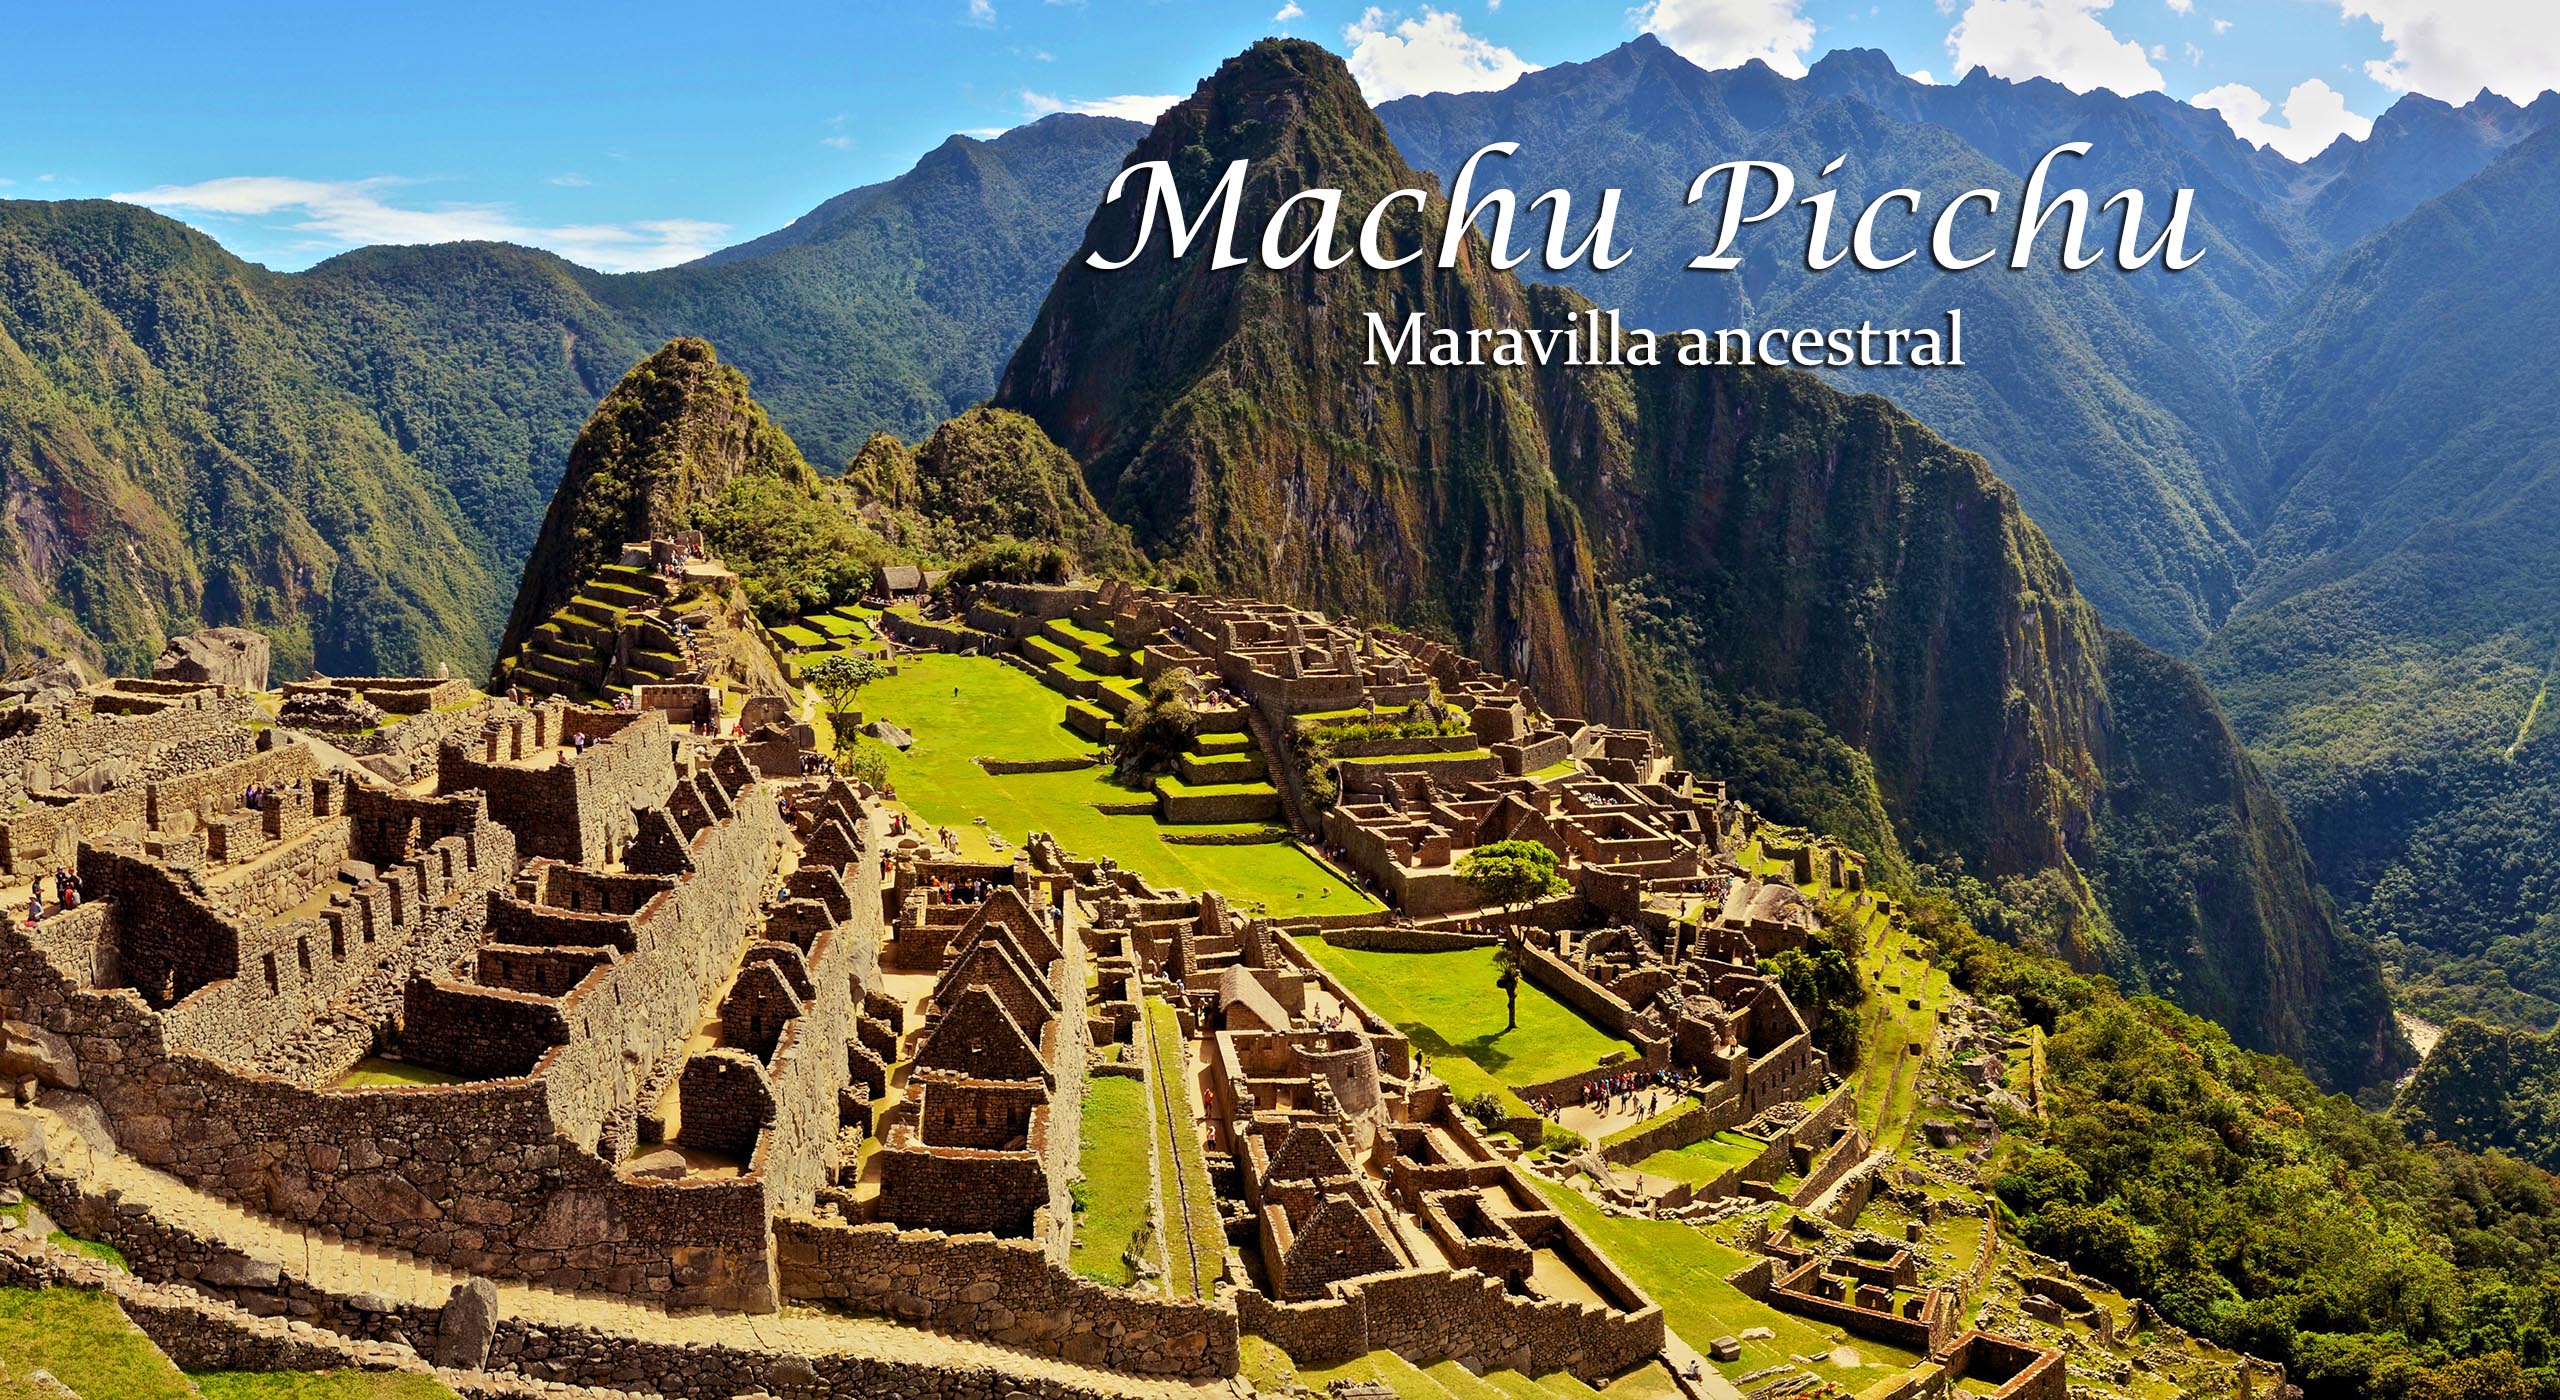 City tour Machu Picchu - Cuzco